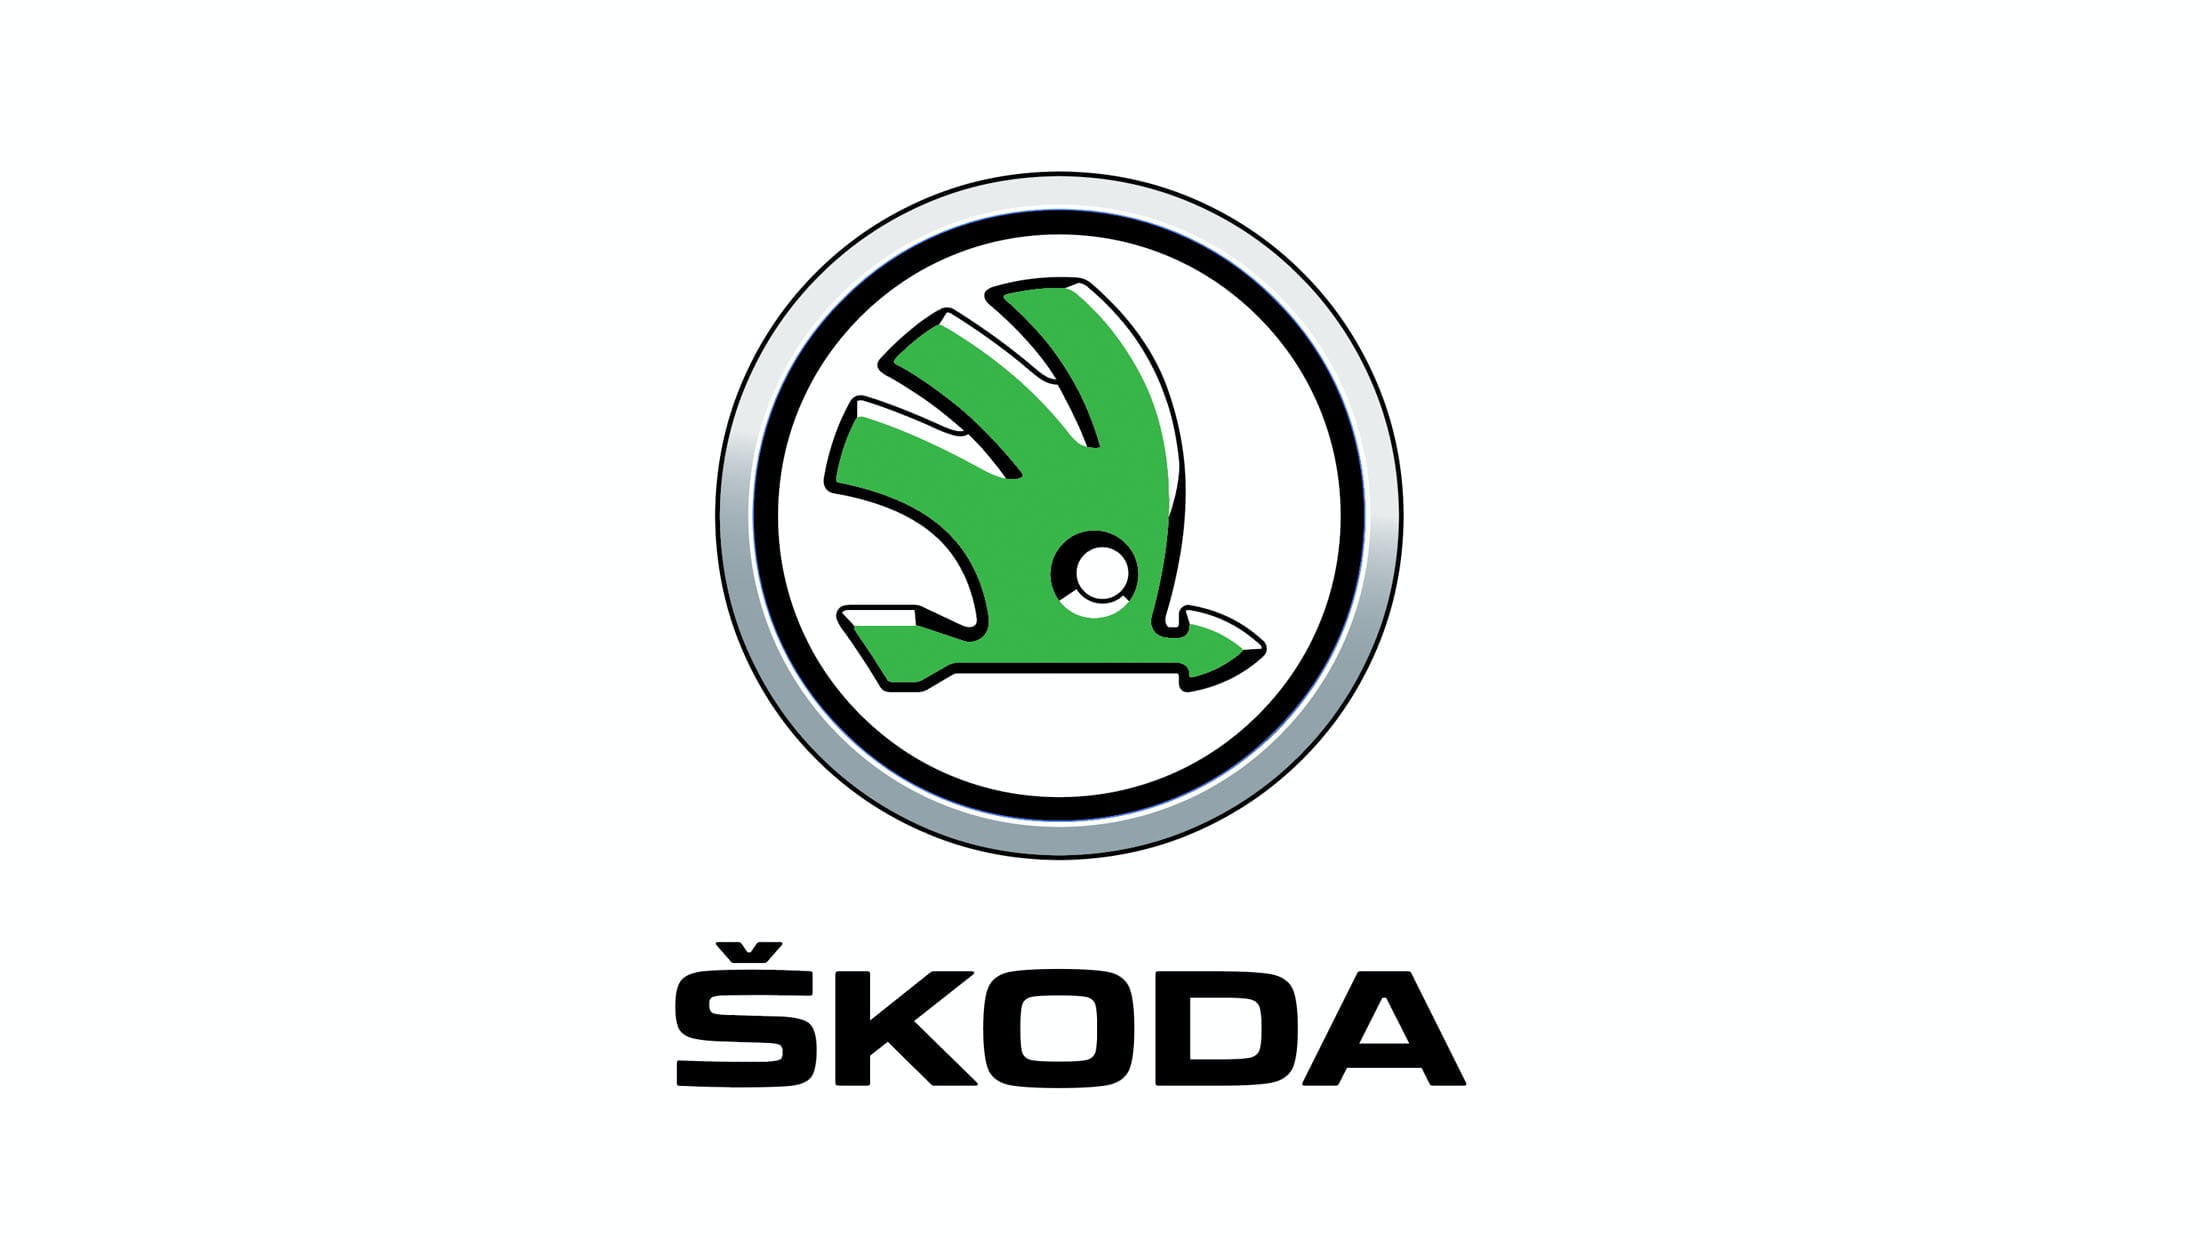 ŠKODA Logo History